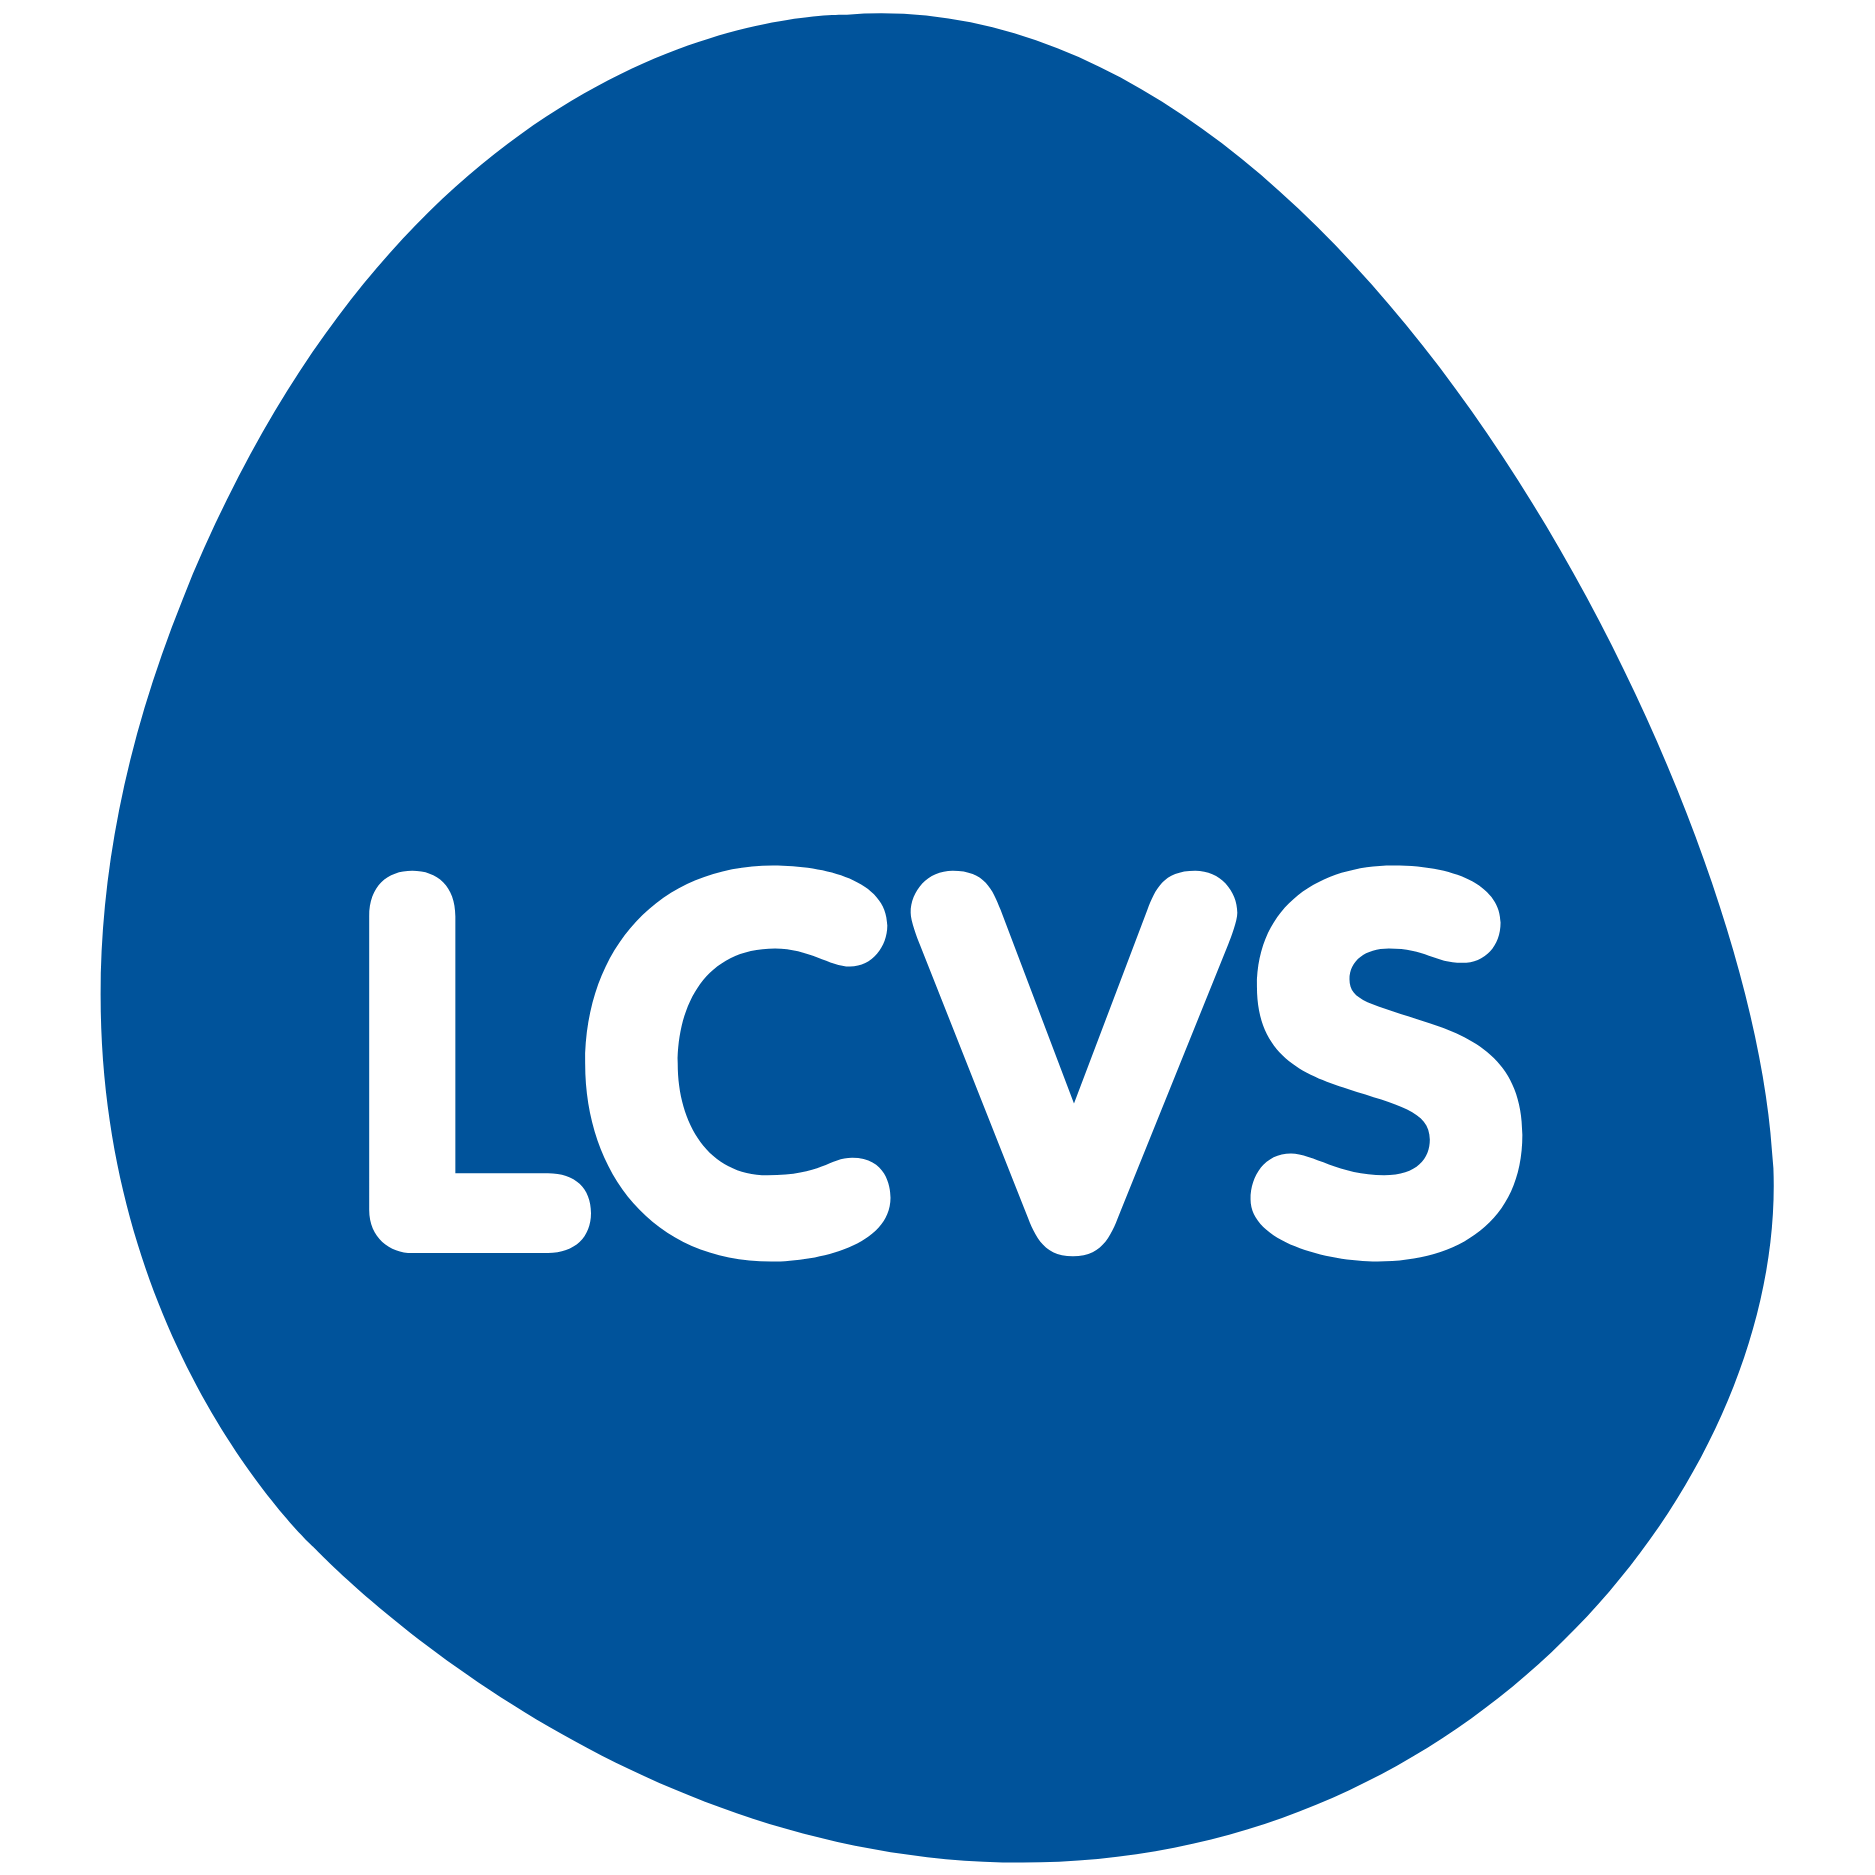 LCVS